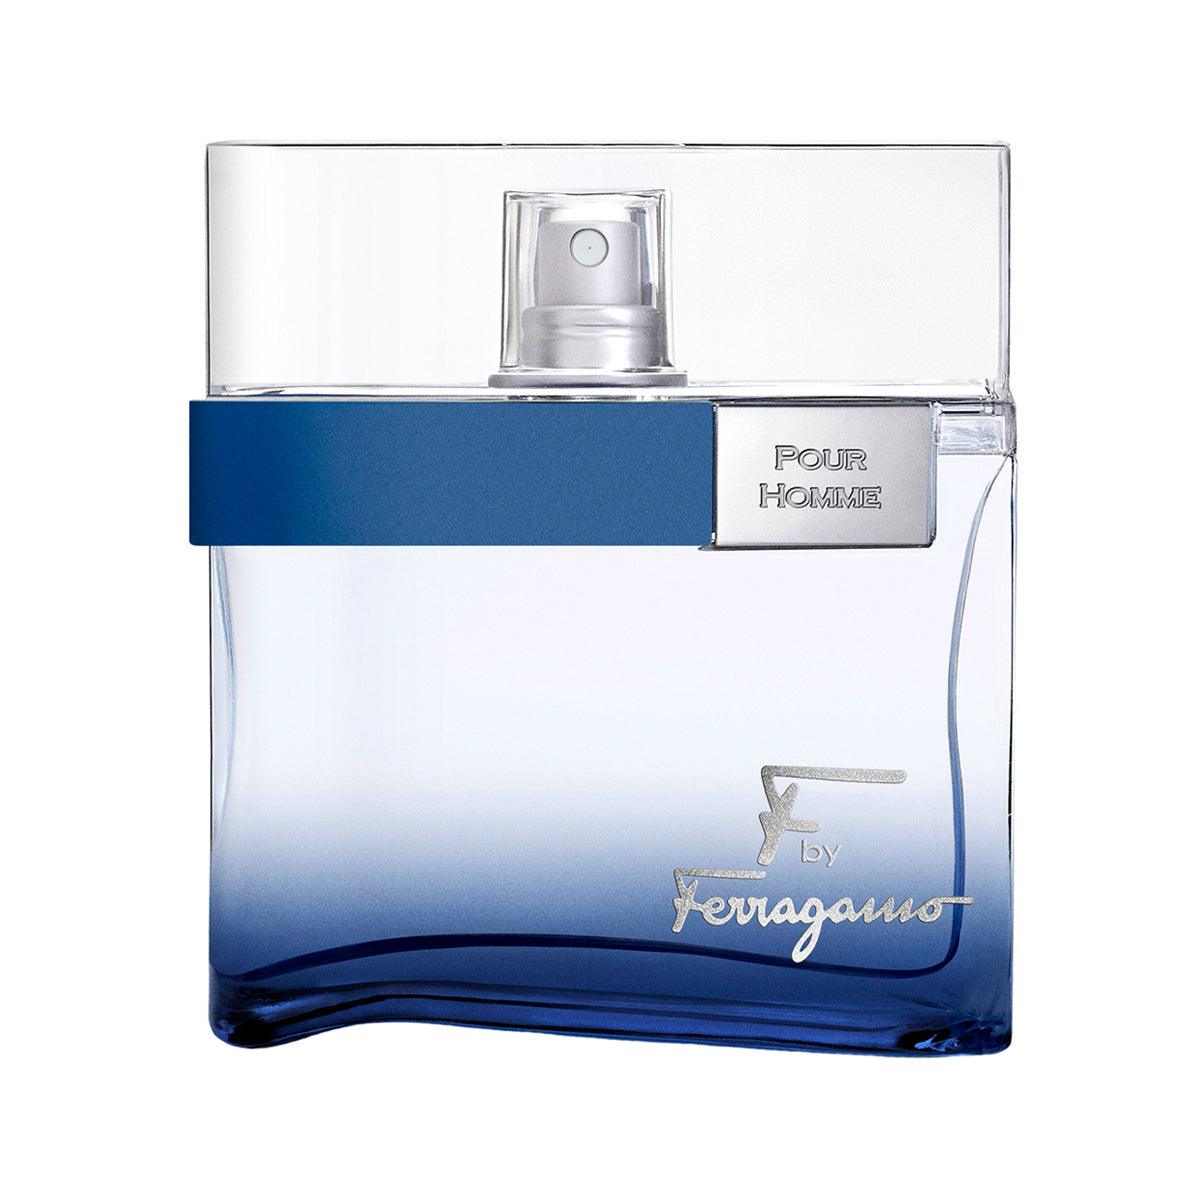 Ferragamo F By Pour Homme Free Time EDT Spray 100ml-Perfume - Allurebeautypk